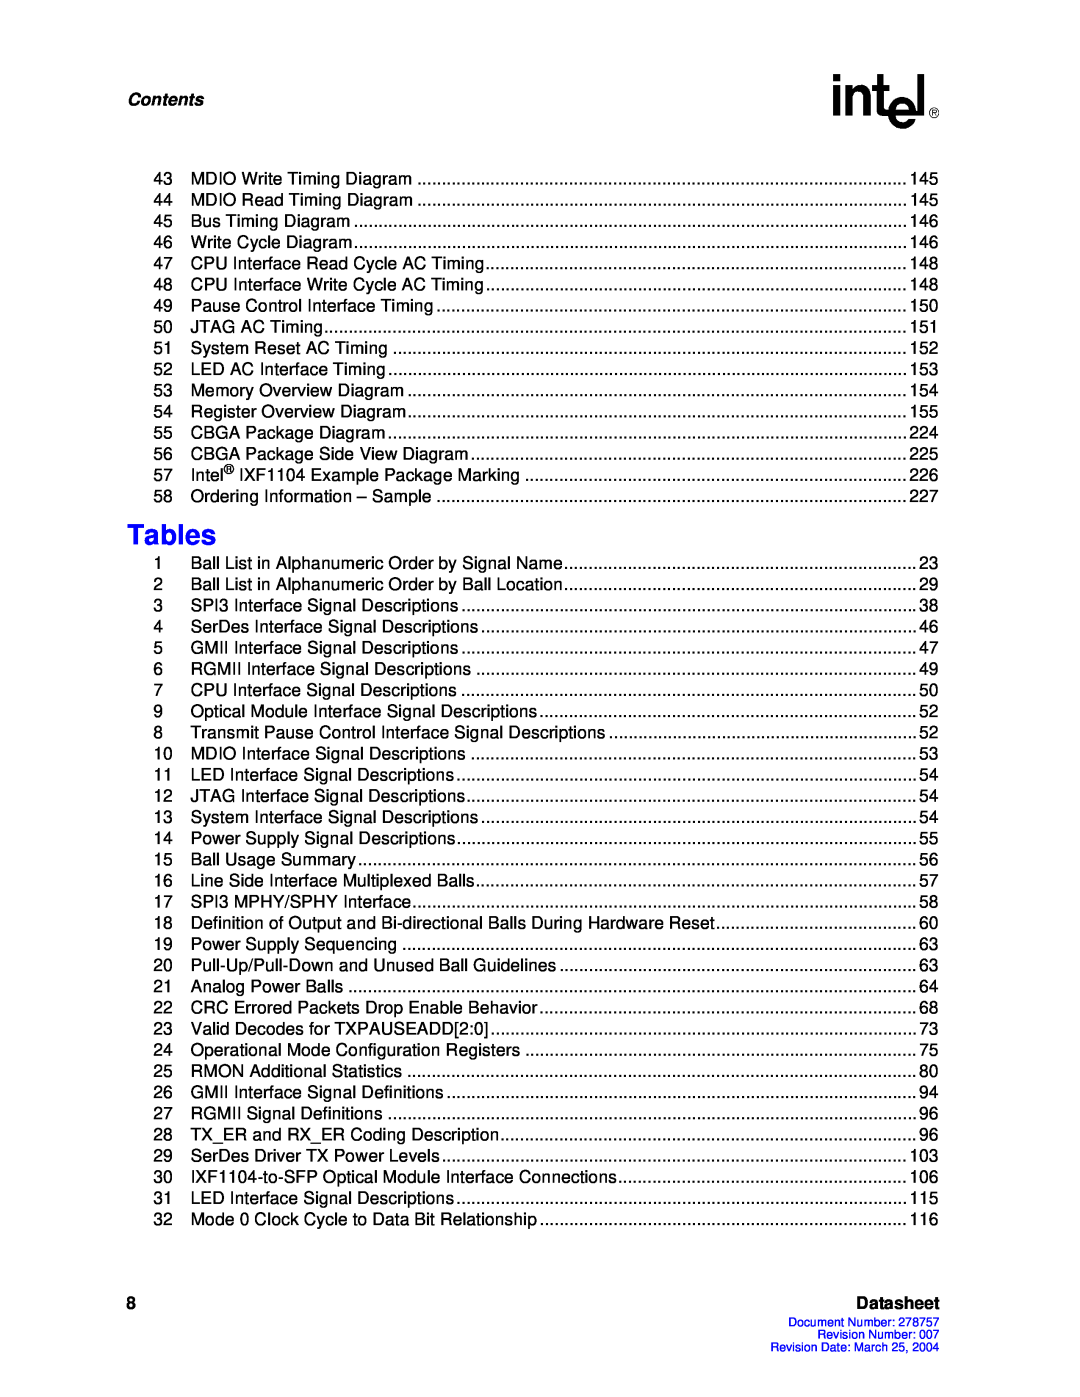 Intel IXF1104 manual Tables, Contents, Datasheet 